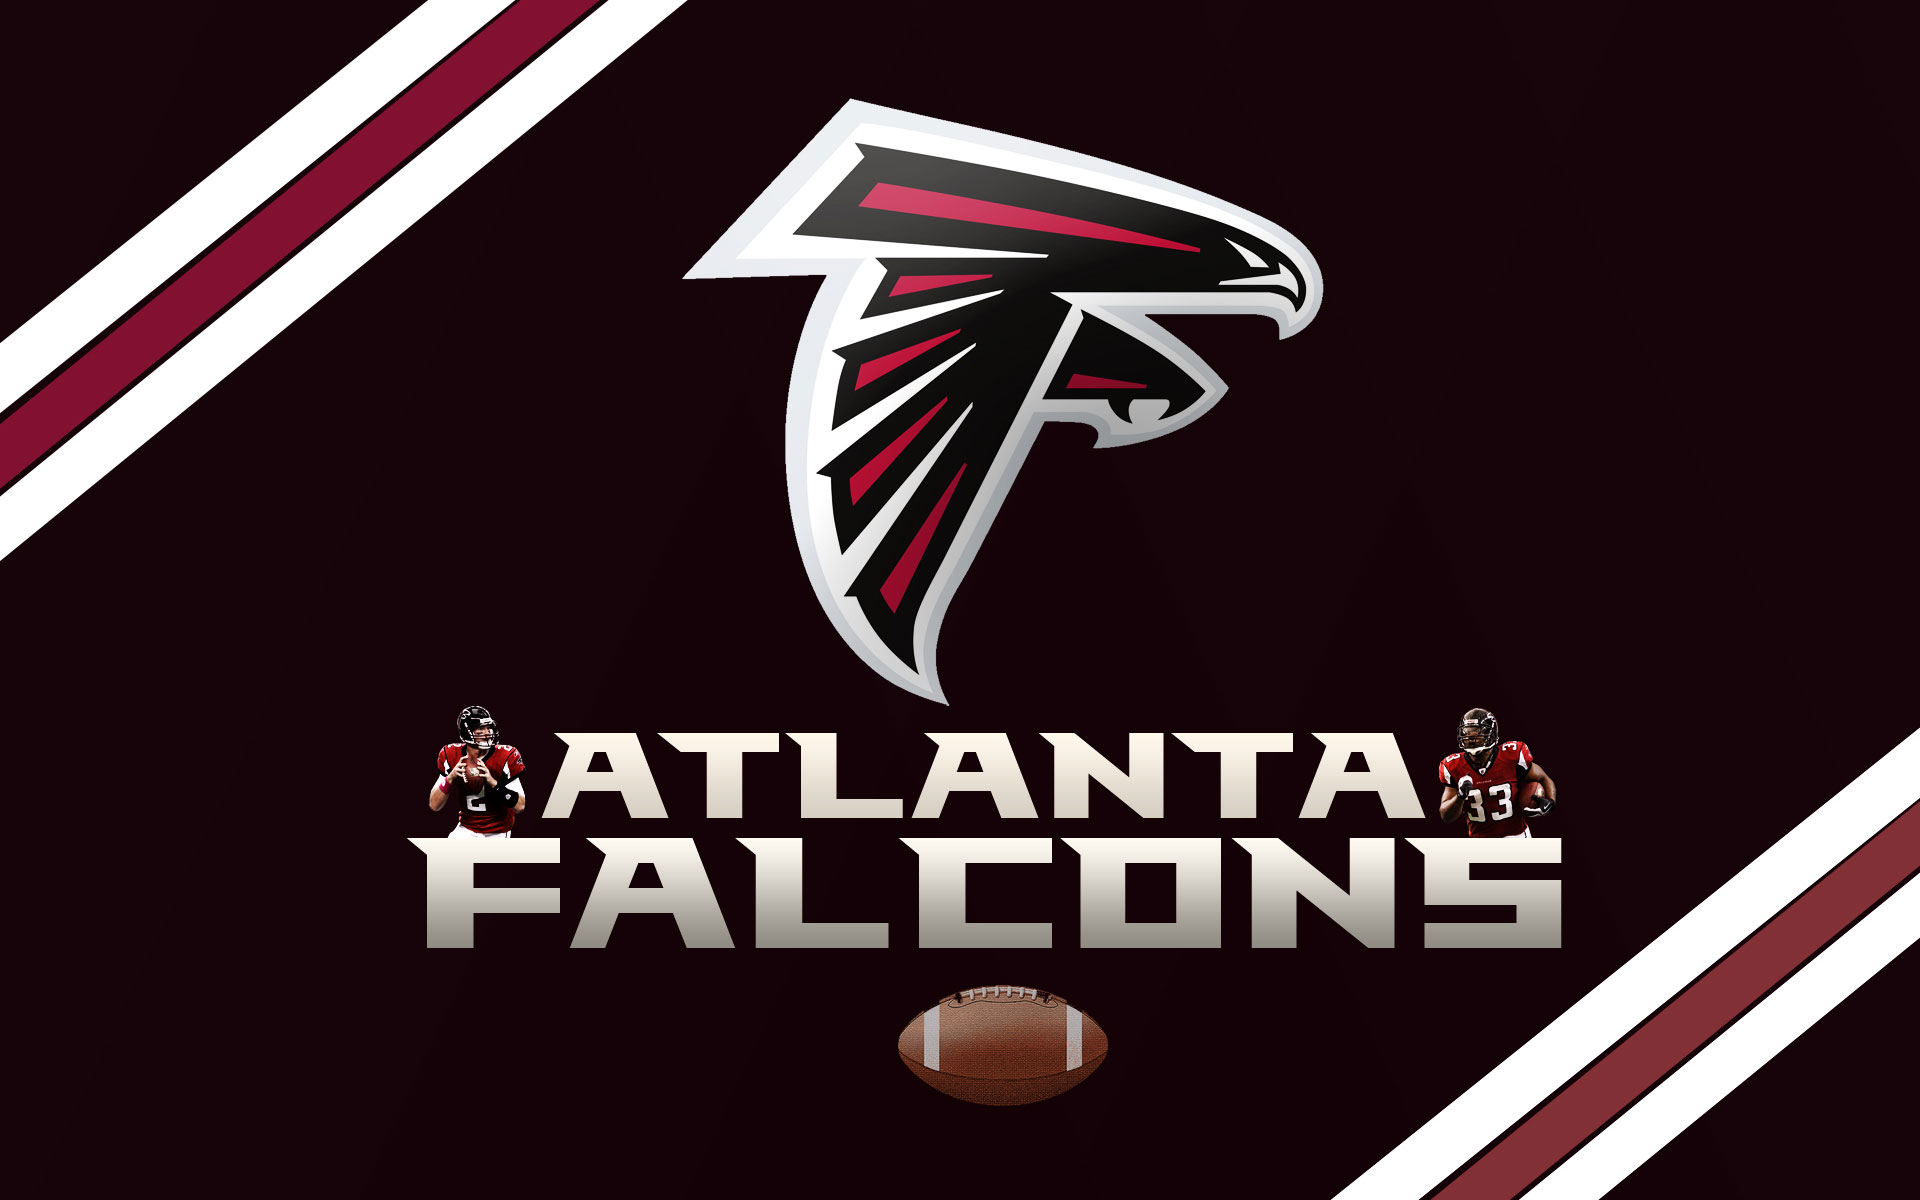 Atlanta Falcons Football Logo HD Wallpaper by Wallsev.com